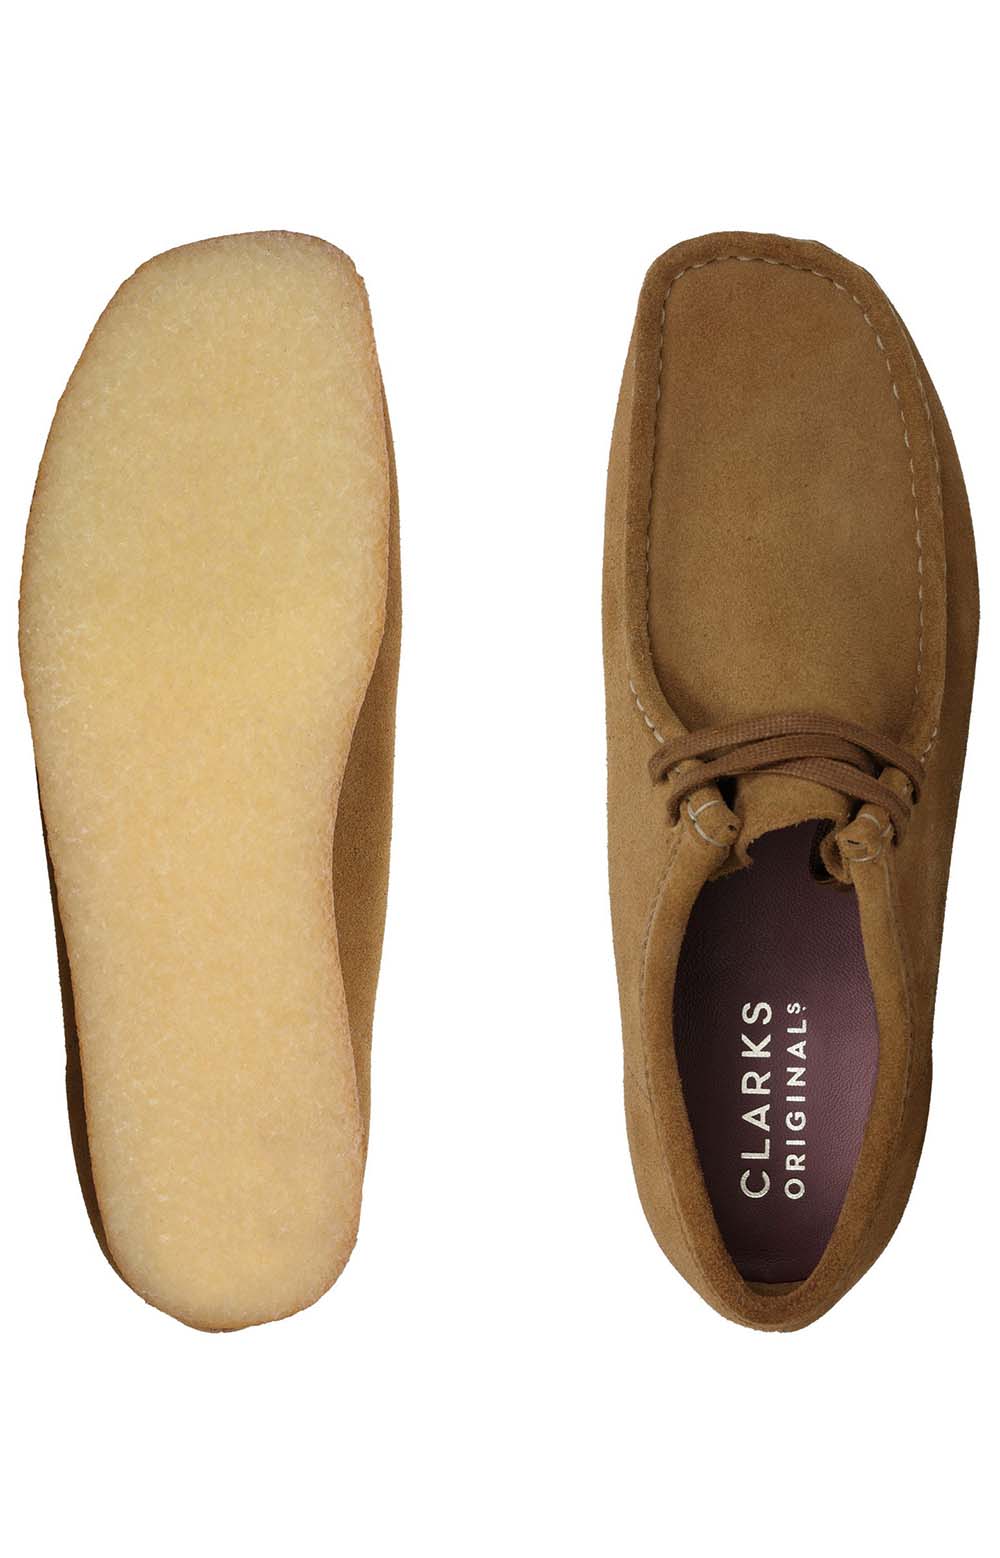 Clarks Originals Wallabee Low Men's Cola Suede 26155518 shoe with matching accessories